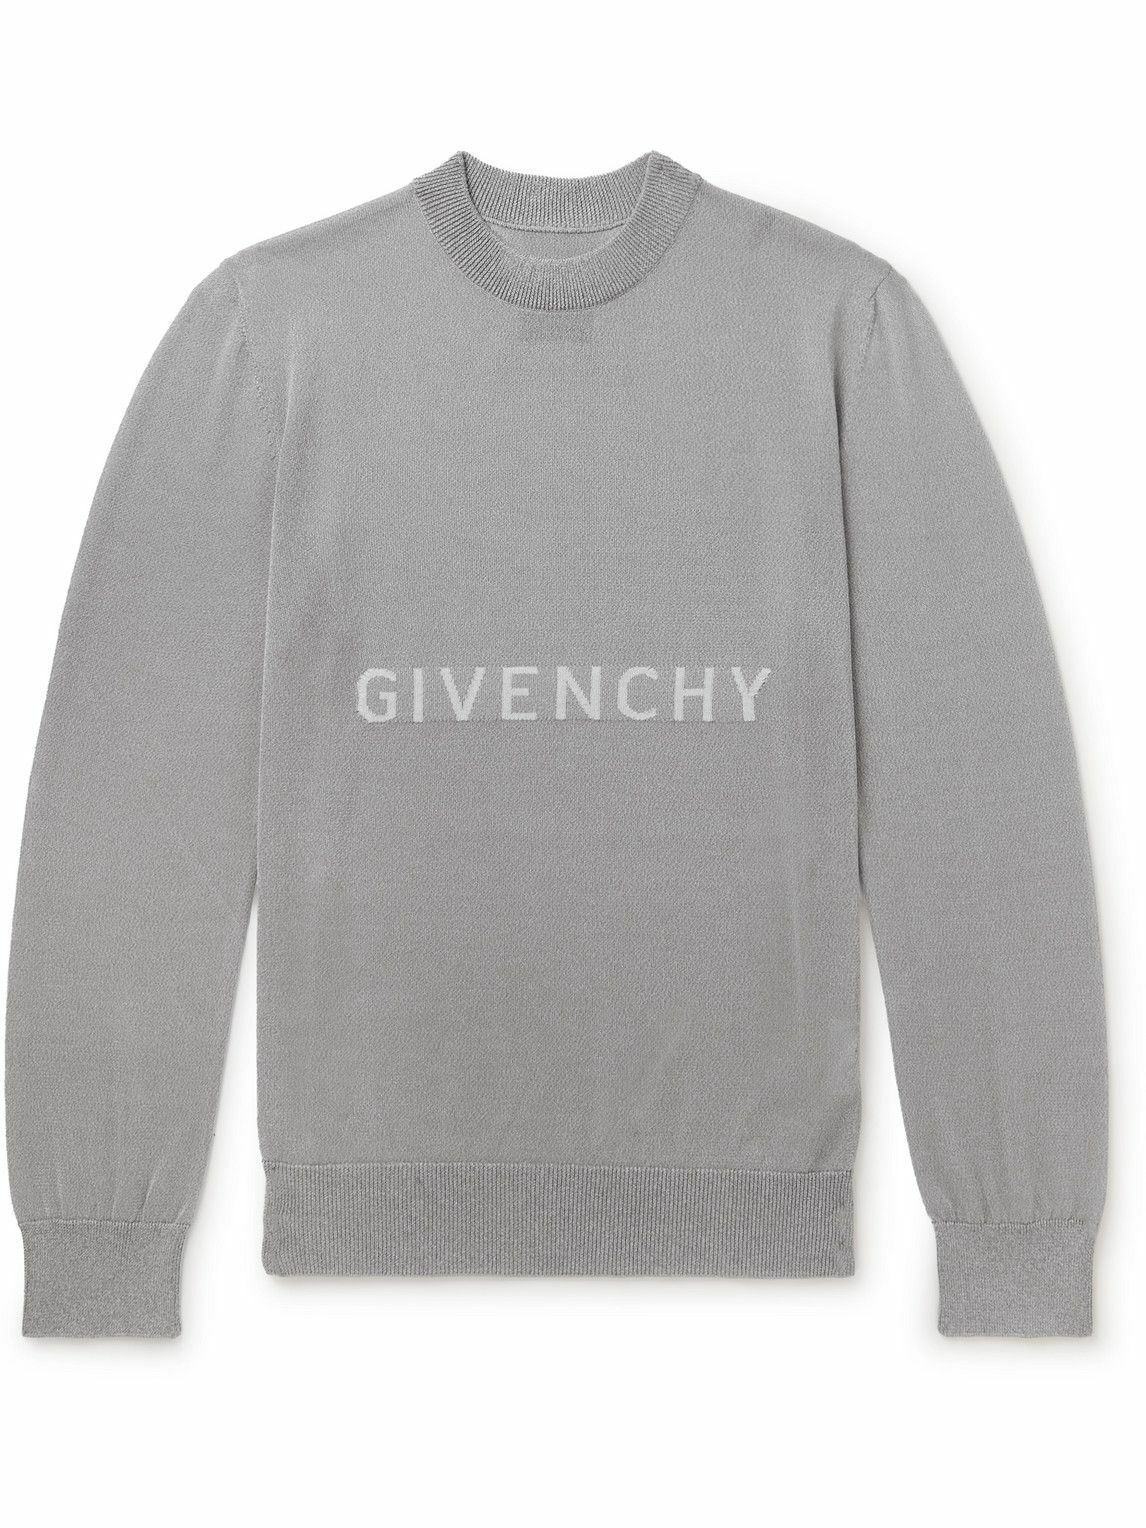 Givenchy - Givenchy Logo-Intarsia Knitted Sweater - Gray Givenchy